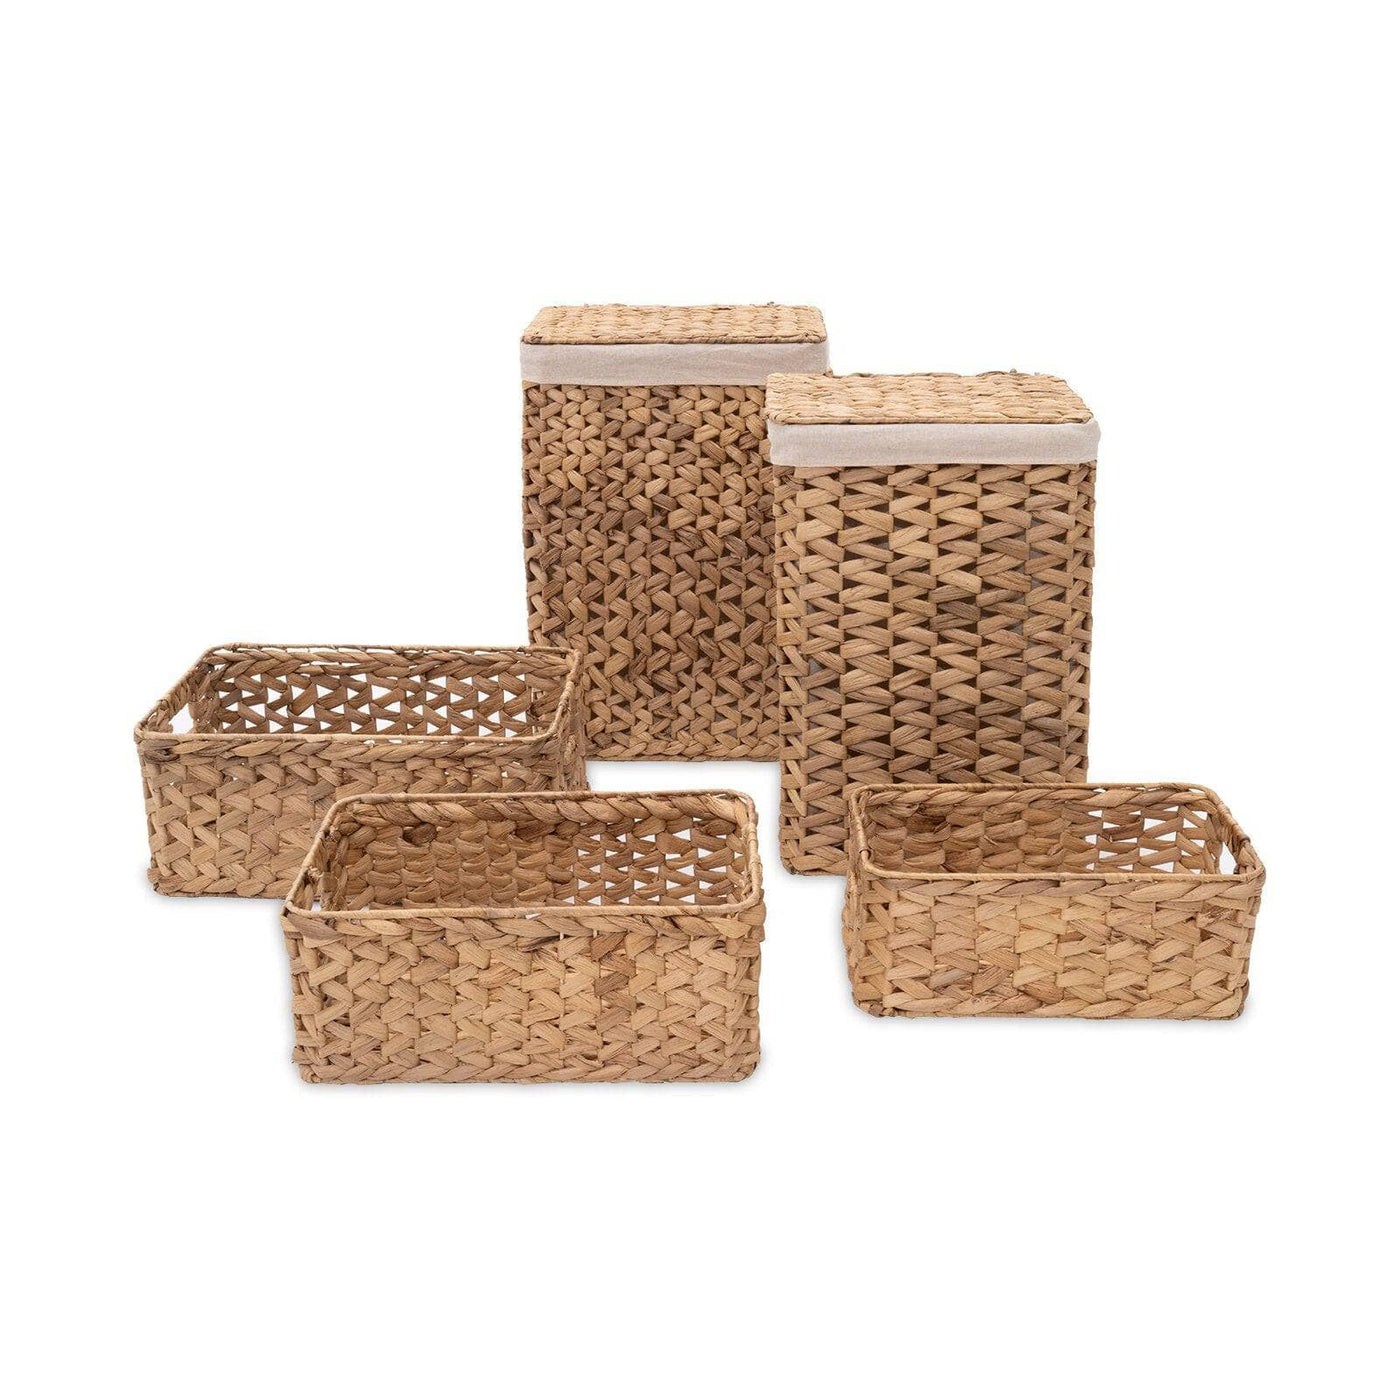 William Water Hyacinth Laundry Box Basket, Natural, XL - 6